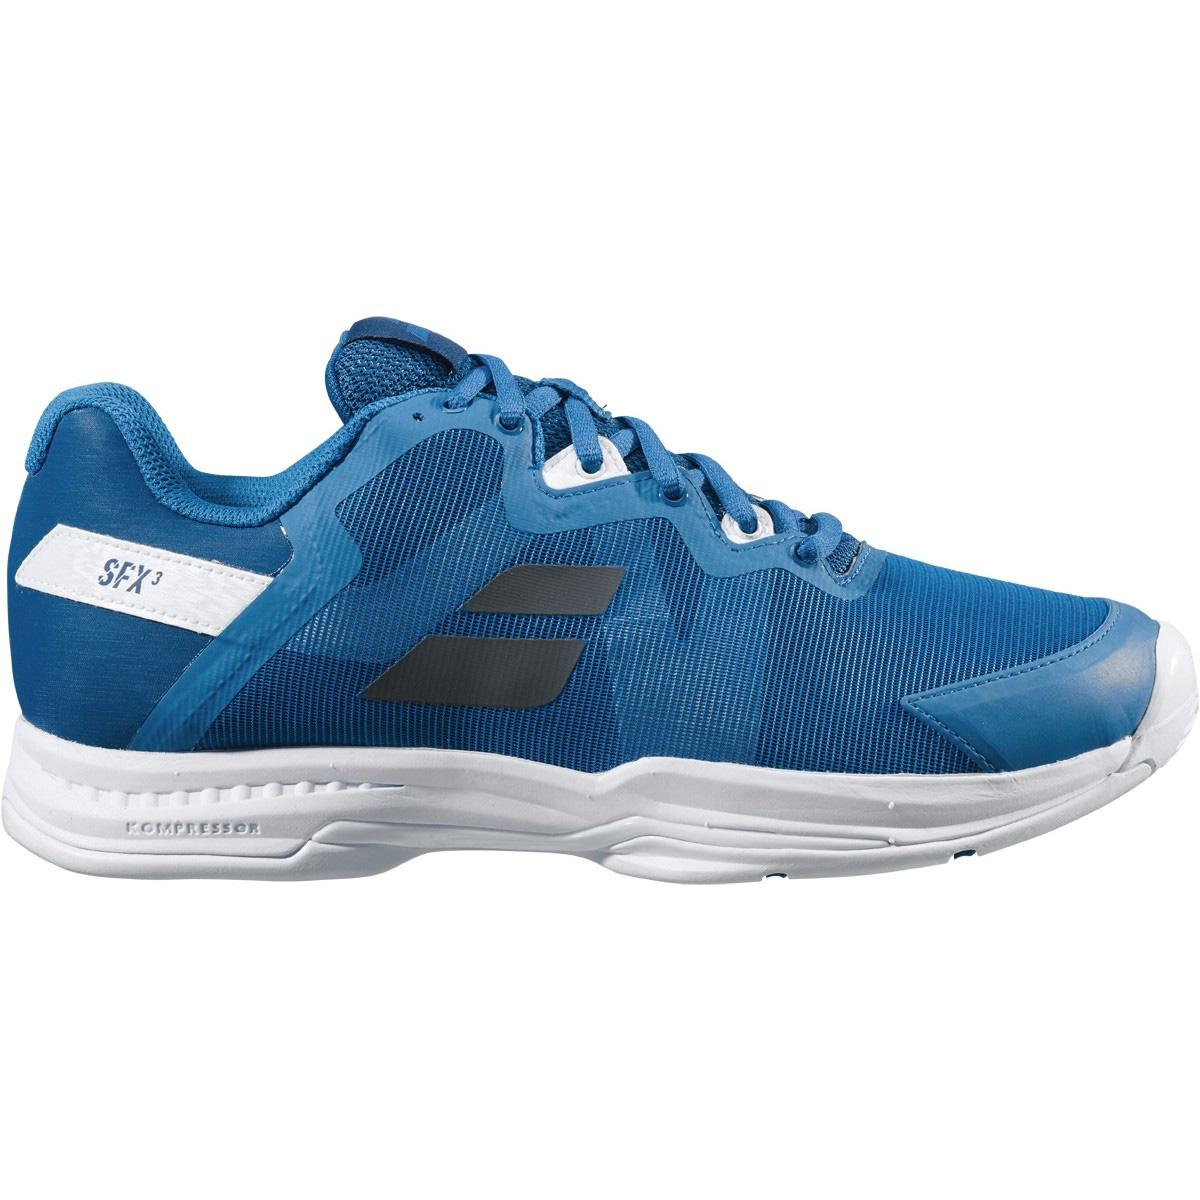 Babolat Mens SFX3 Tennis Shoes - Dark Blue - Tennisnuts.com